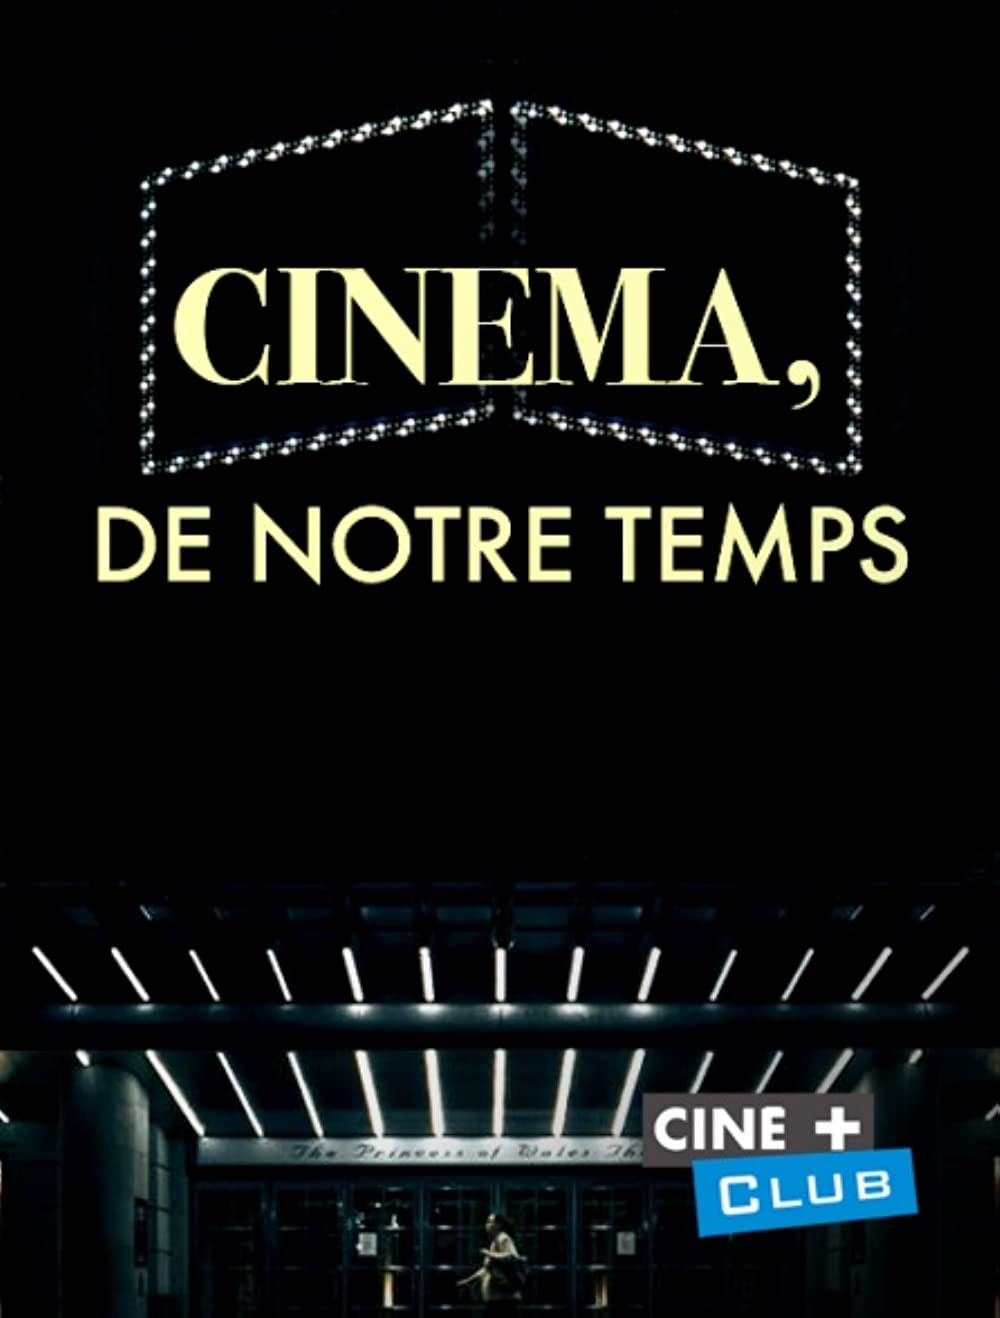 Filmbeschreibung zu Cinéma, de notre temps